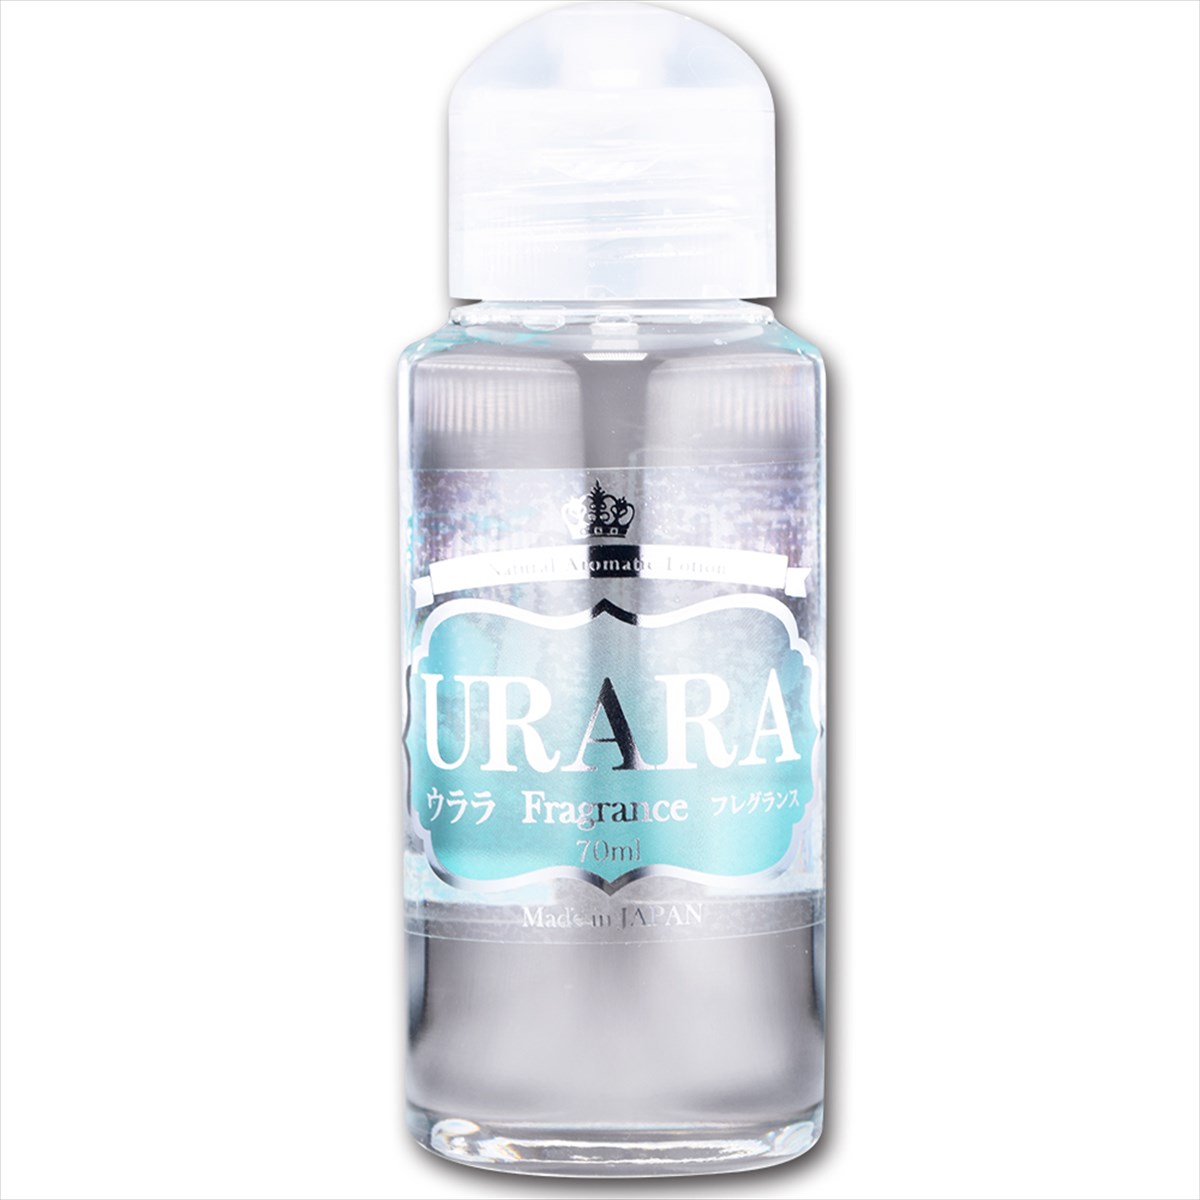 URARA Fragrance 70ml